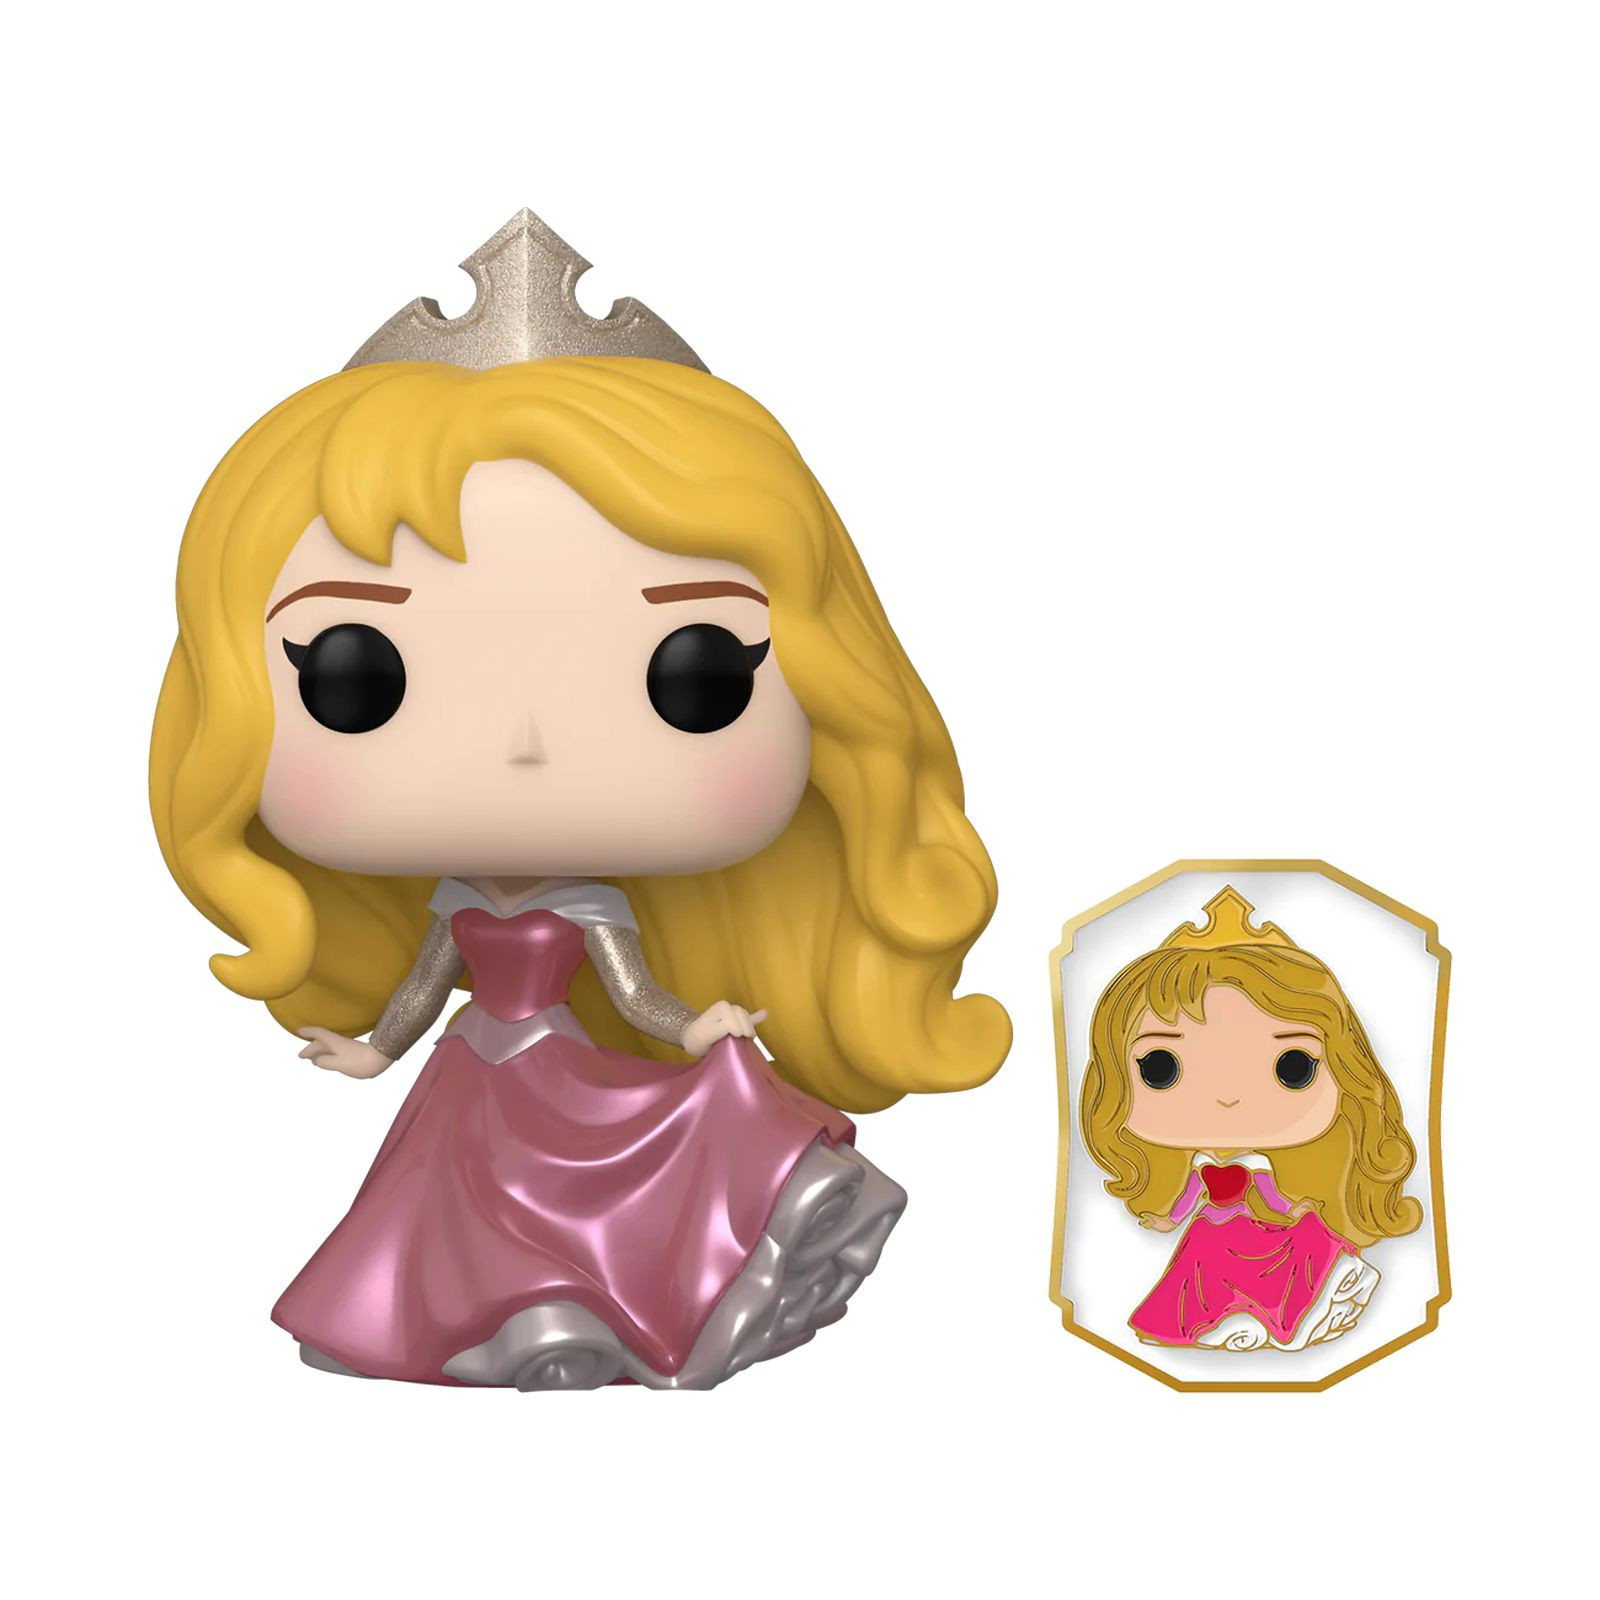 https://www.kingcollector.fr/49003/figurine-pop-disney-princess-aurore-with-pin-n-325-funko.jpg